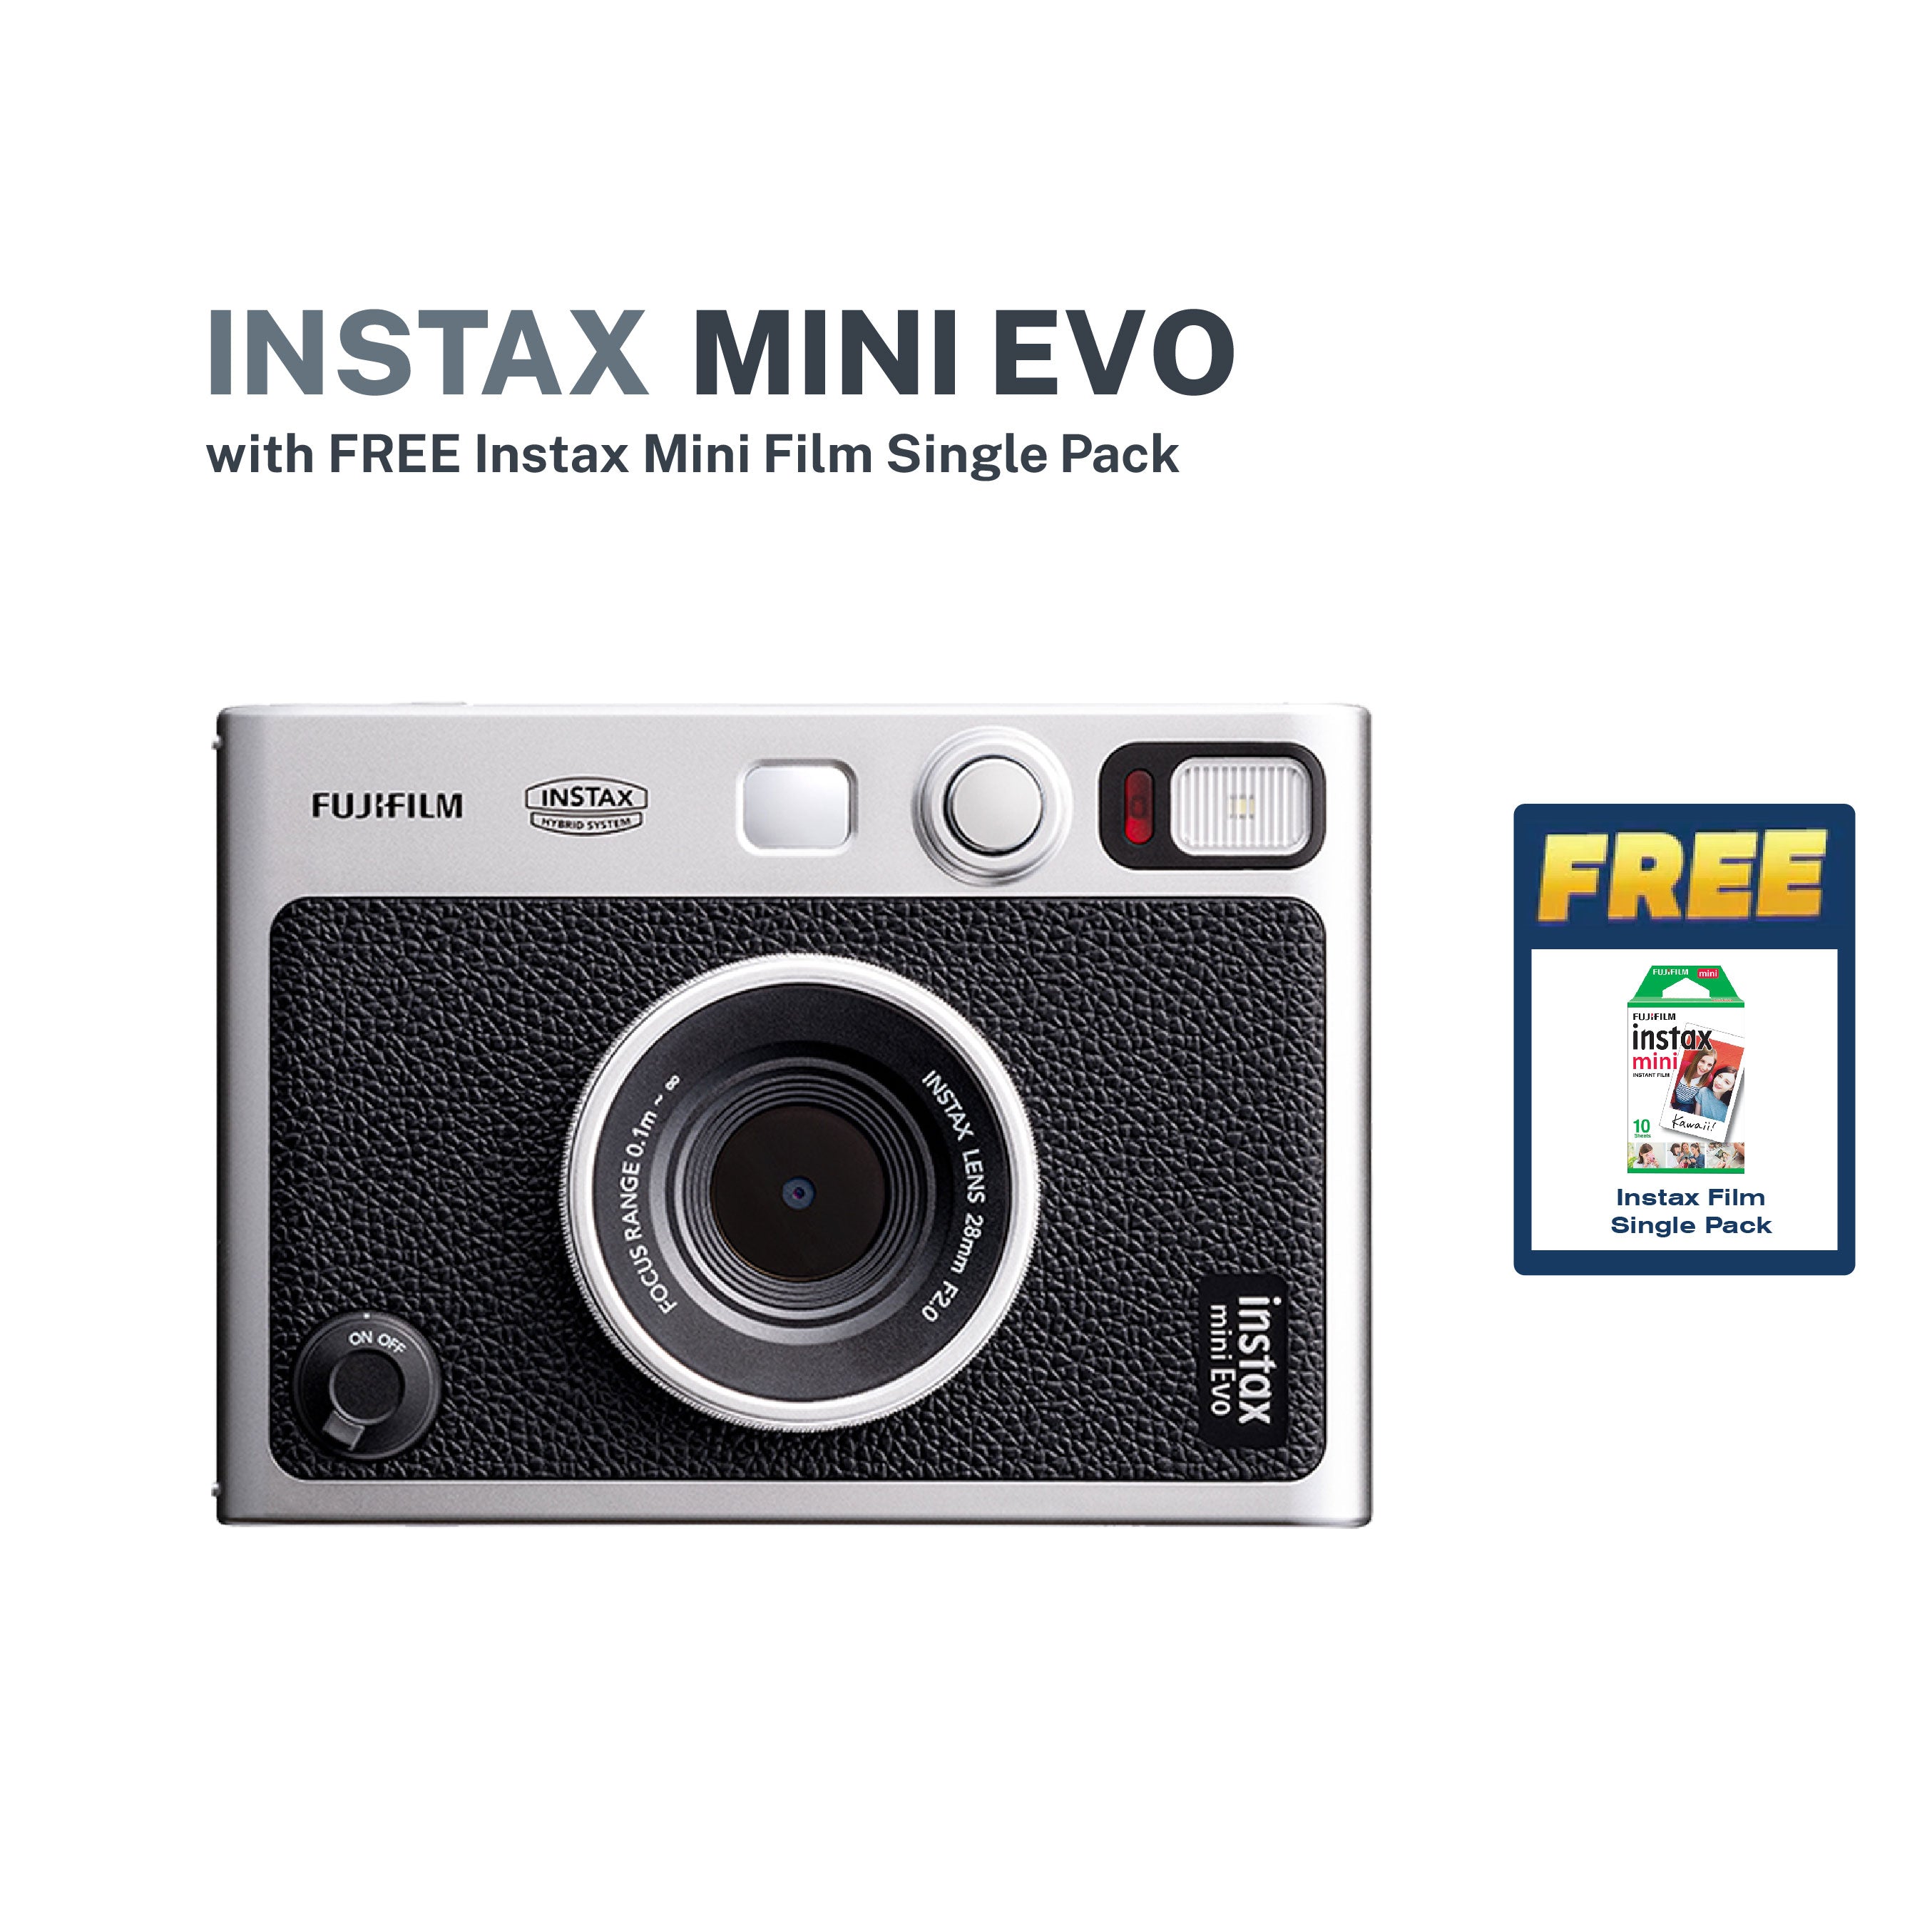 Fujifilm Instax Mini Evo review: The best instant camera ever made